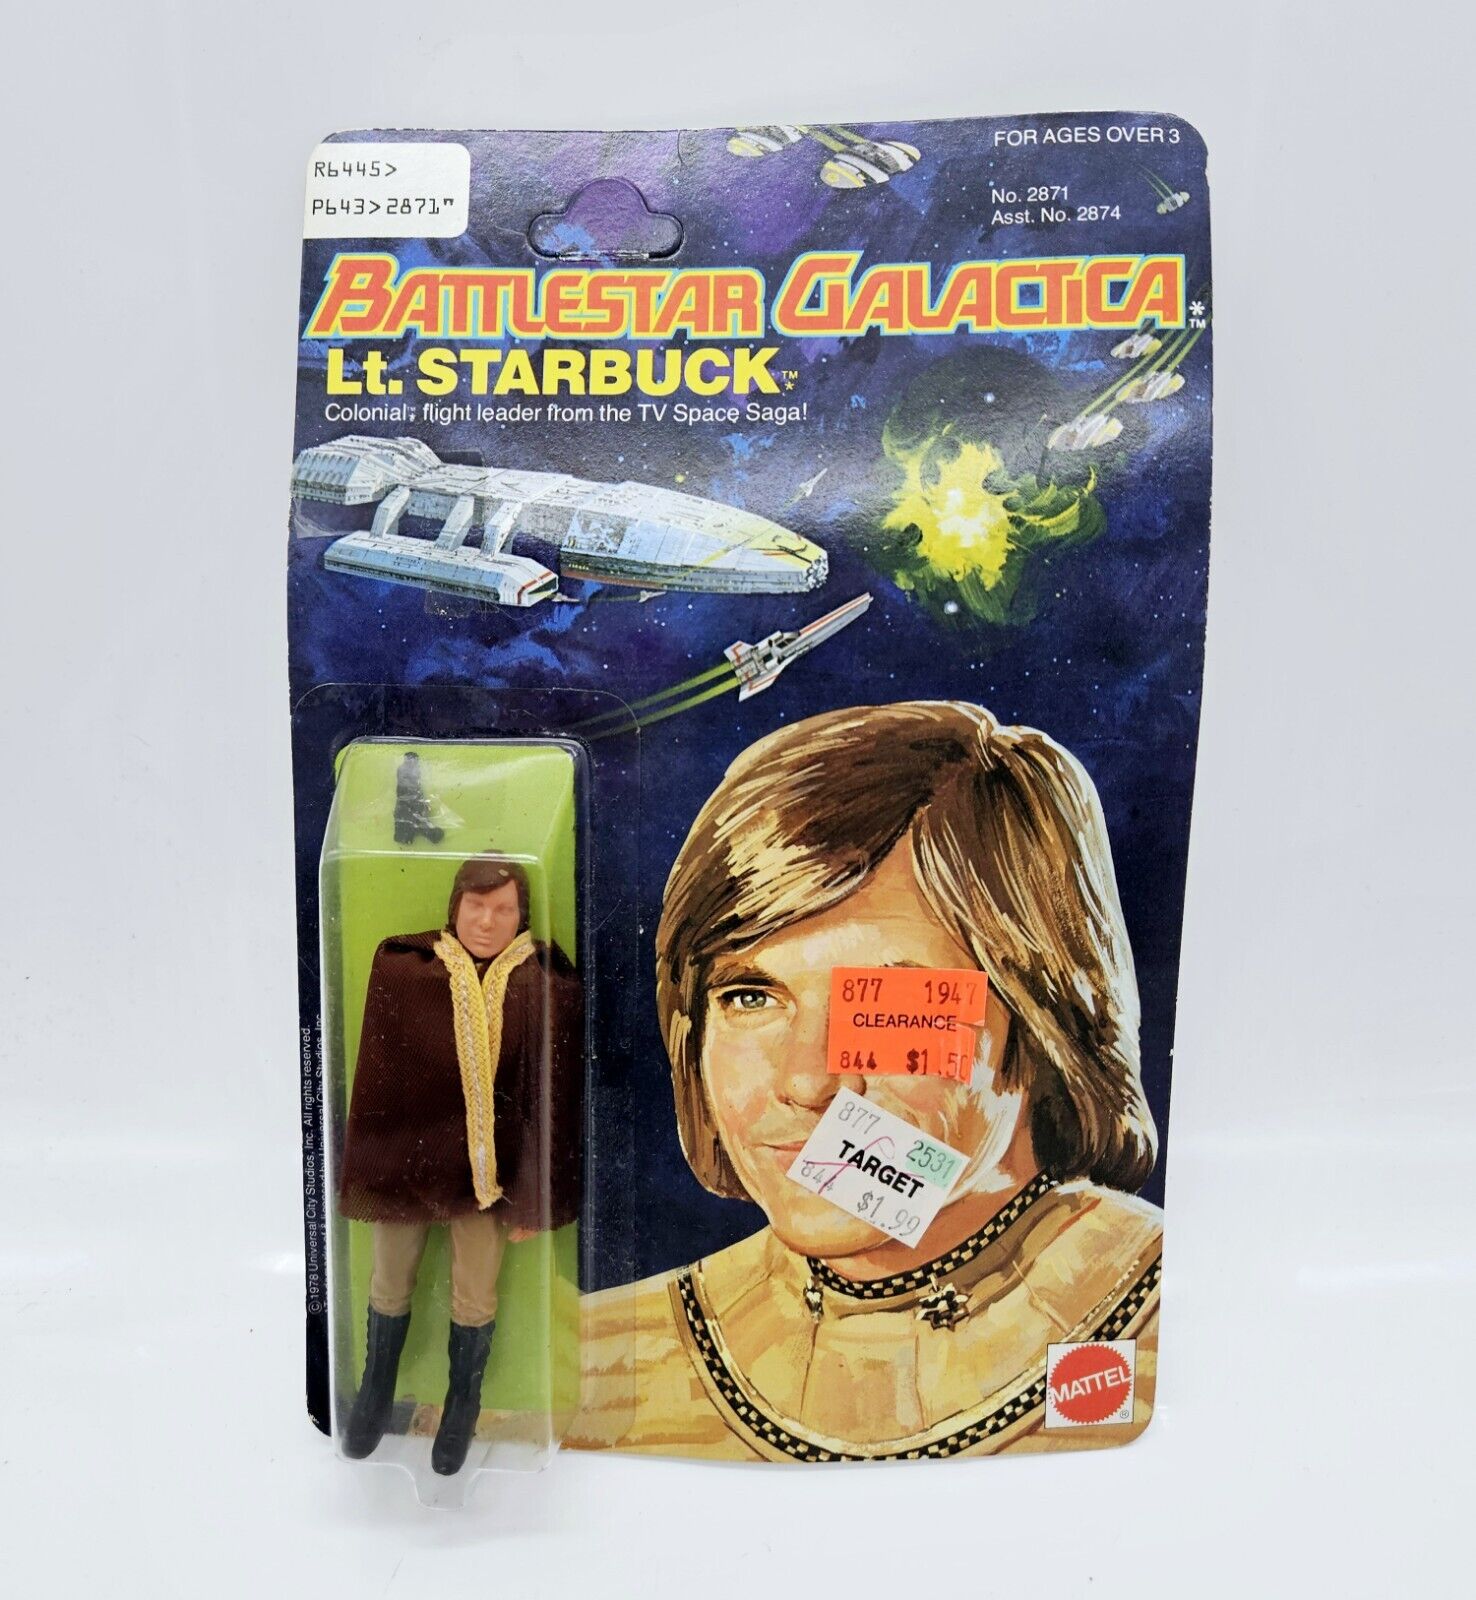 Mattel Battlestar Galactica Lt Starbuck Action Figure New on Original Card